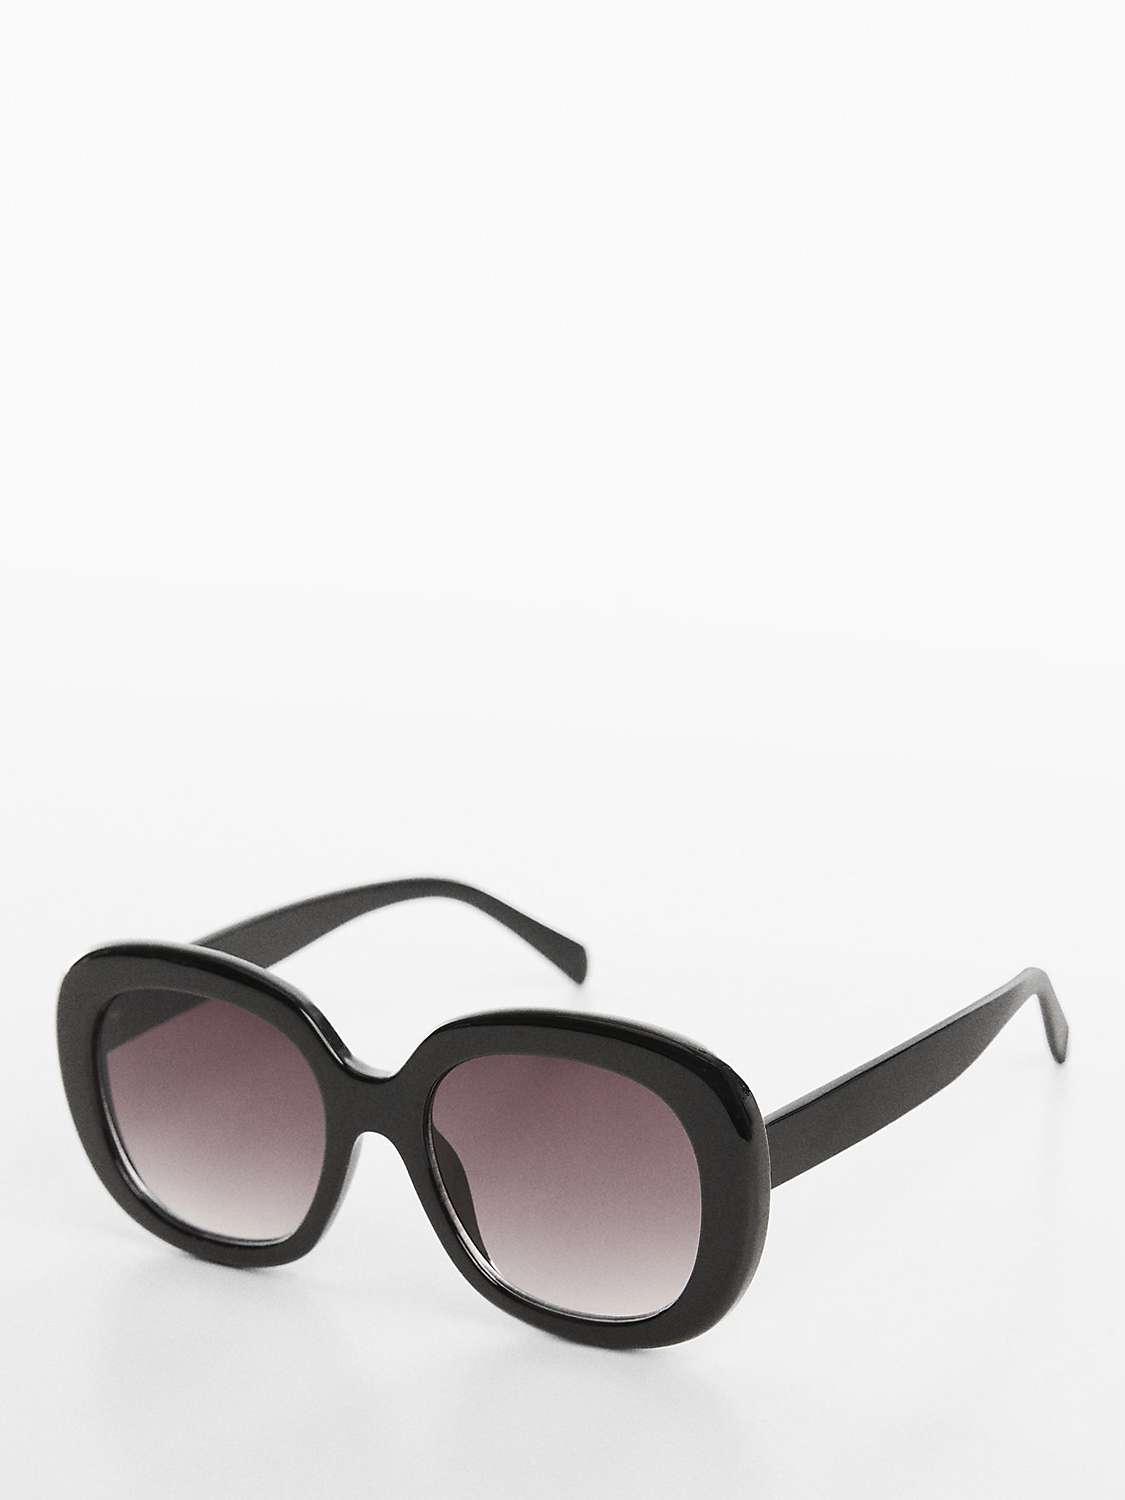 Buy Mango Favignan Maxi Sunglasses, Black Online at johnlewis.com